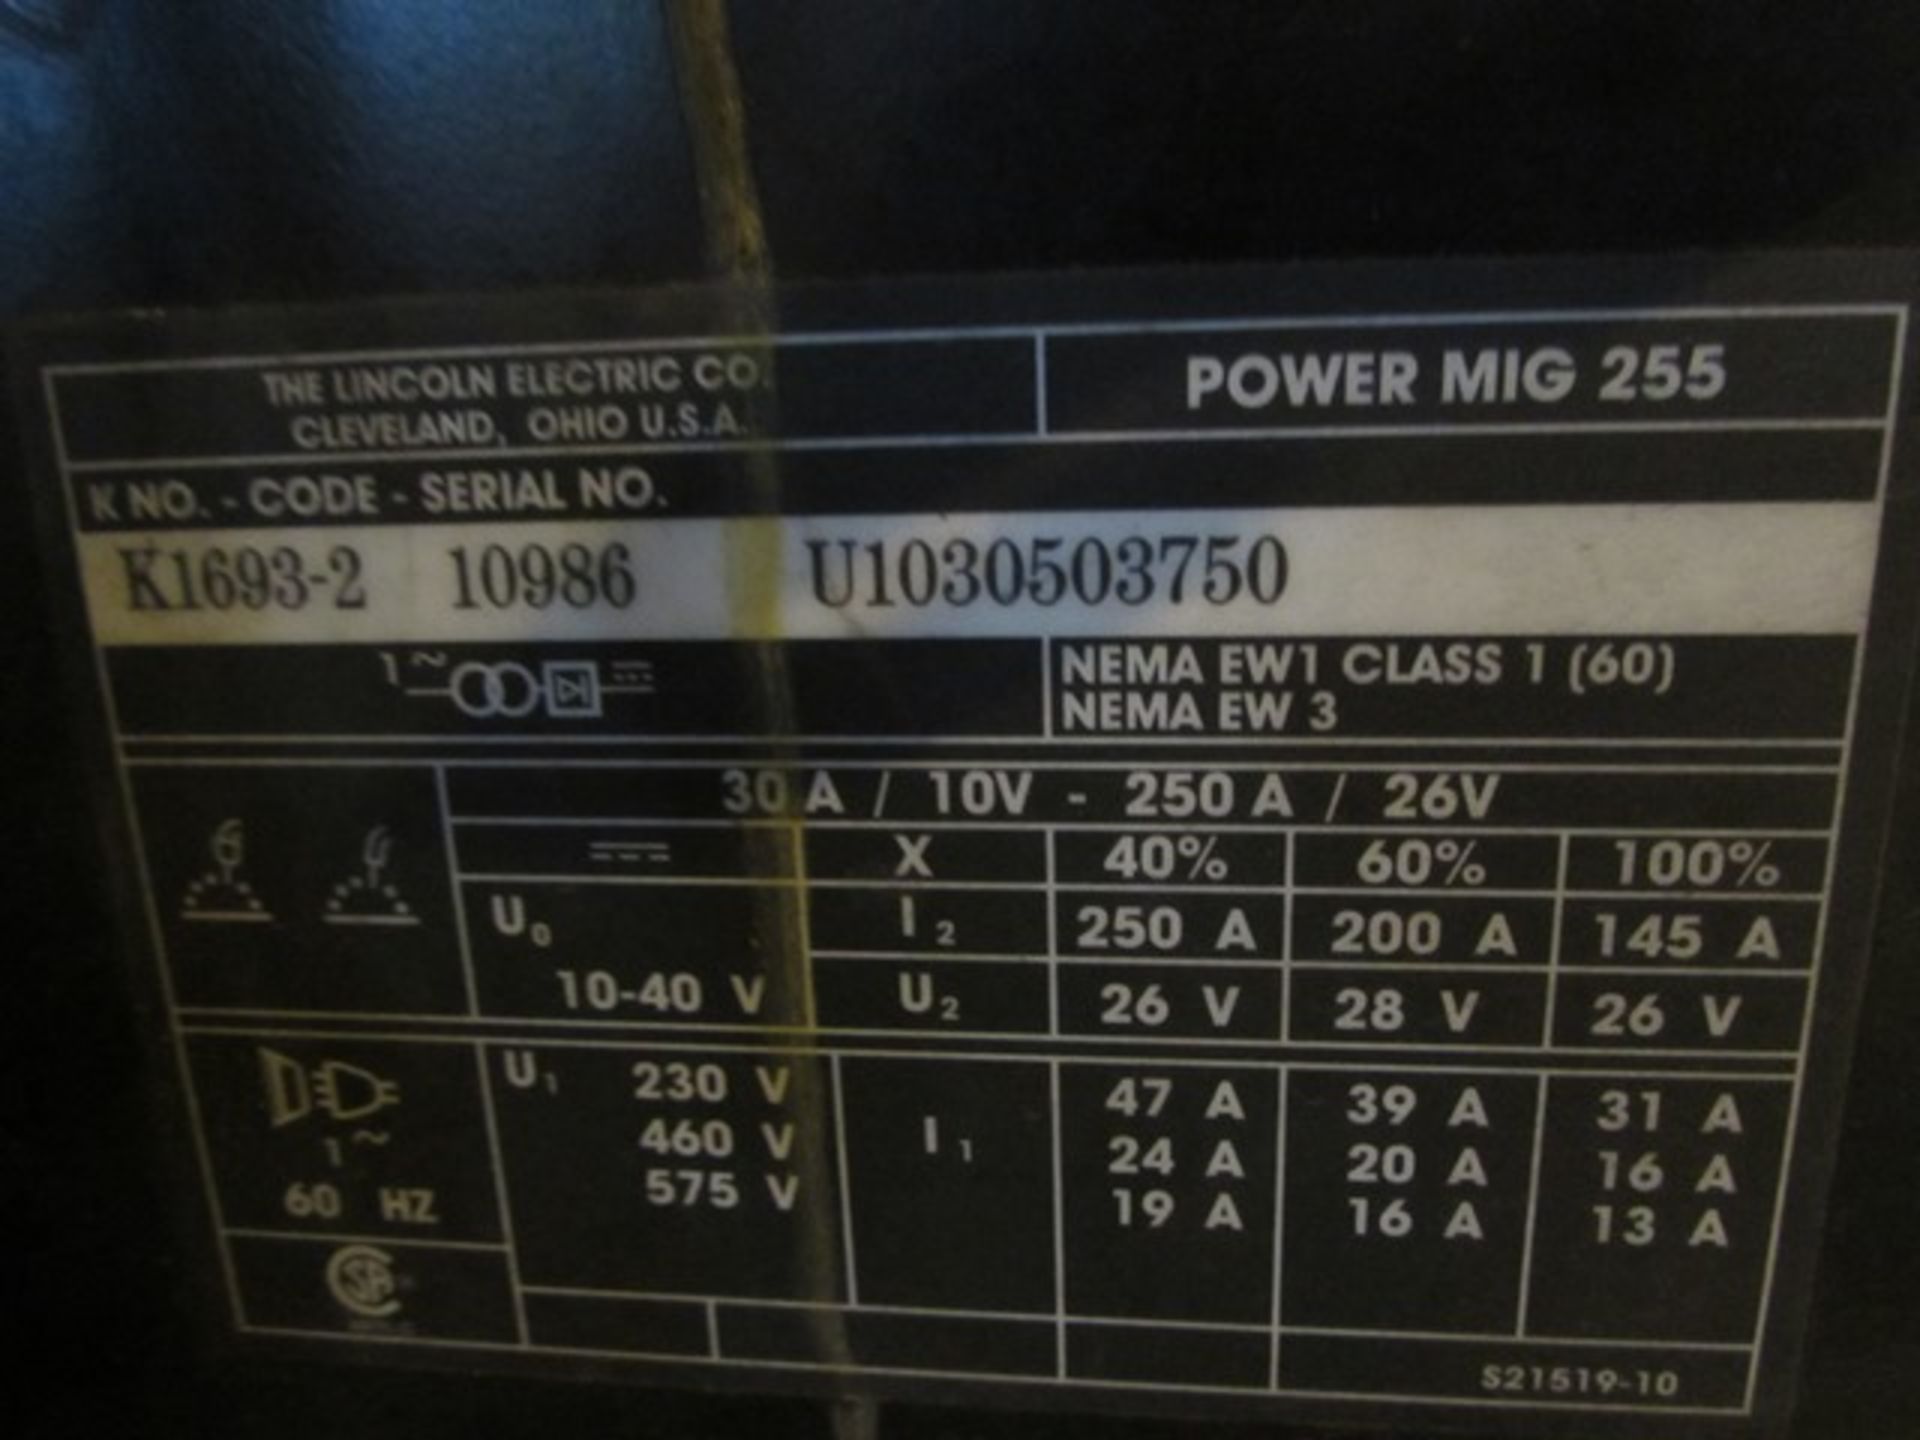 Lincoln Electric Power Mig 255 mig welder S/N - U1030503750 - Image 3 of 3